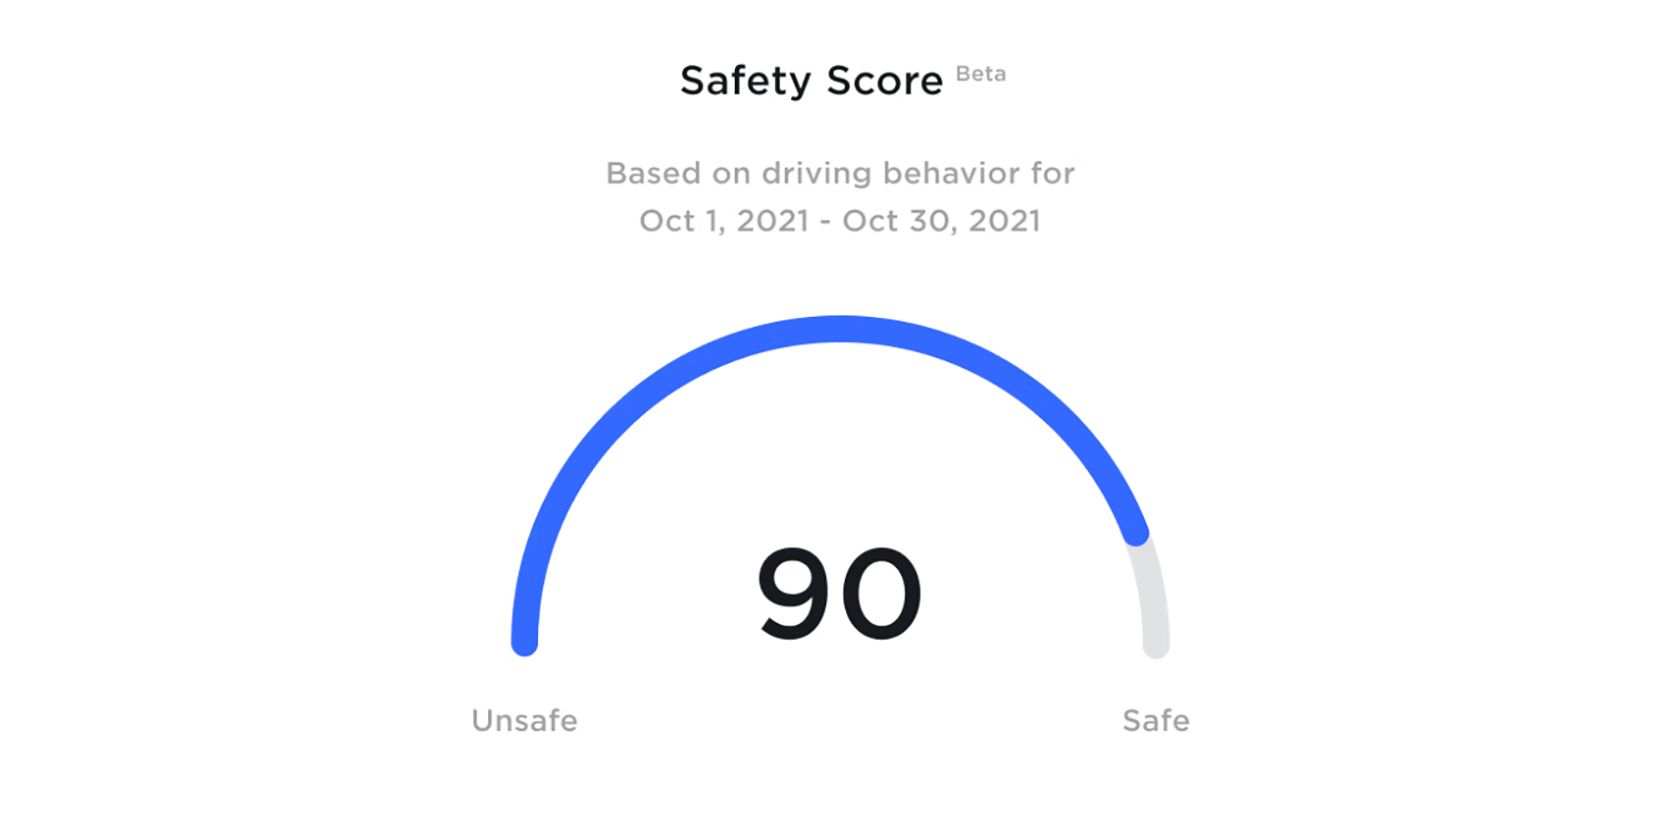 Tesla Safety Score of 90